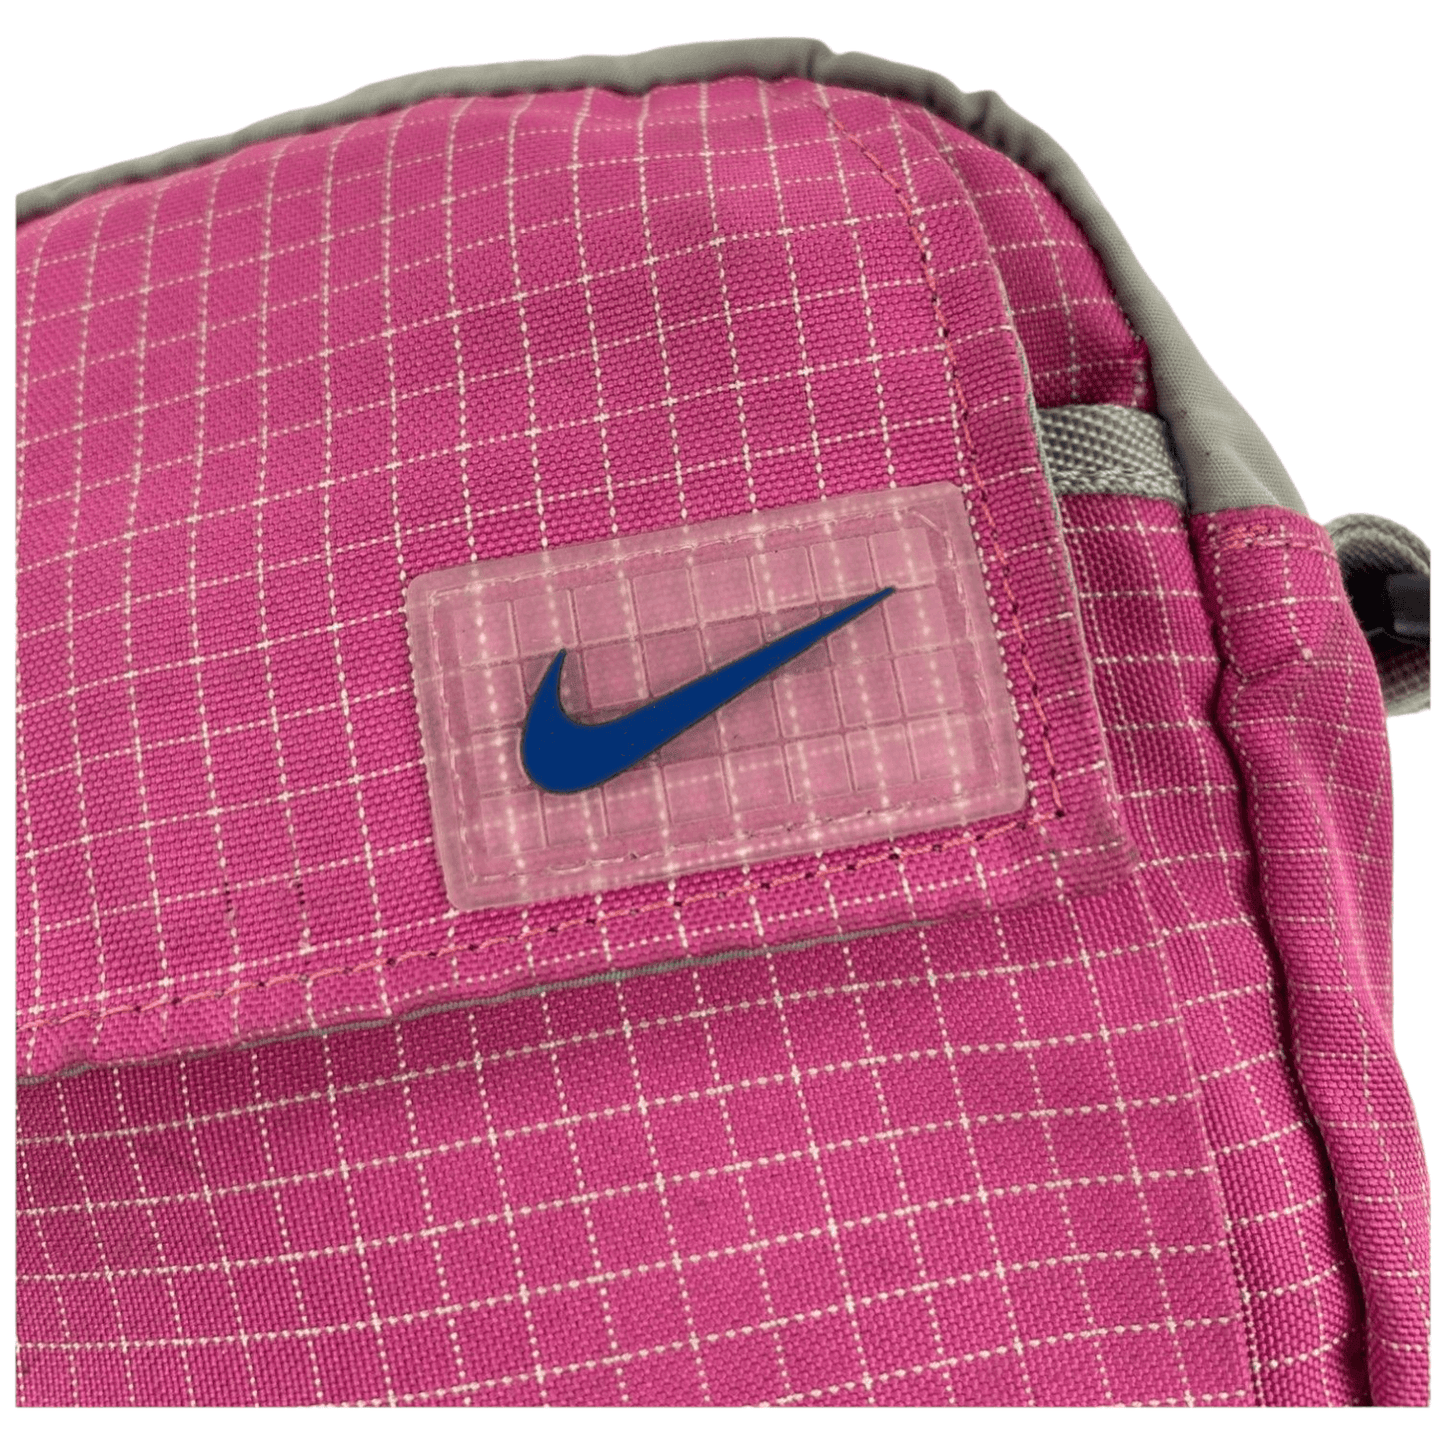 Vintage Nike Grid Cross Body Bag - Known Source